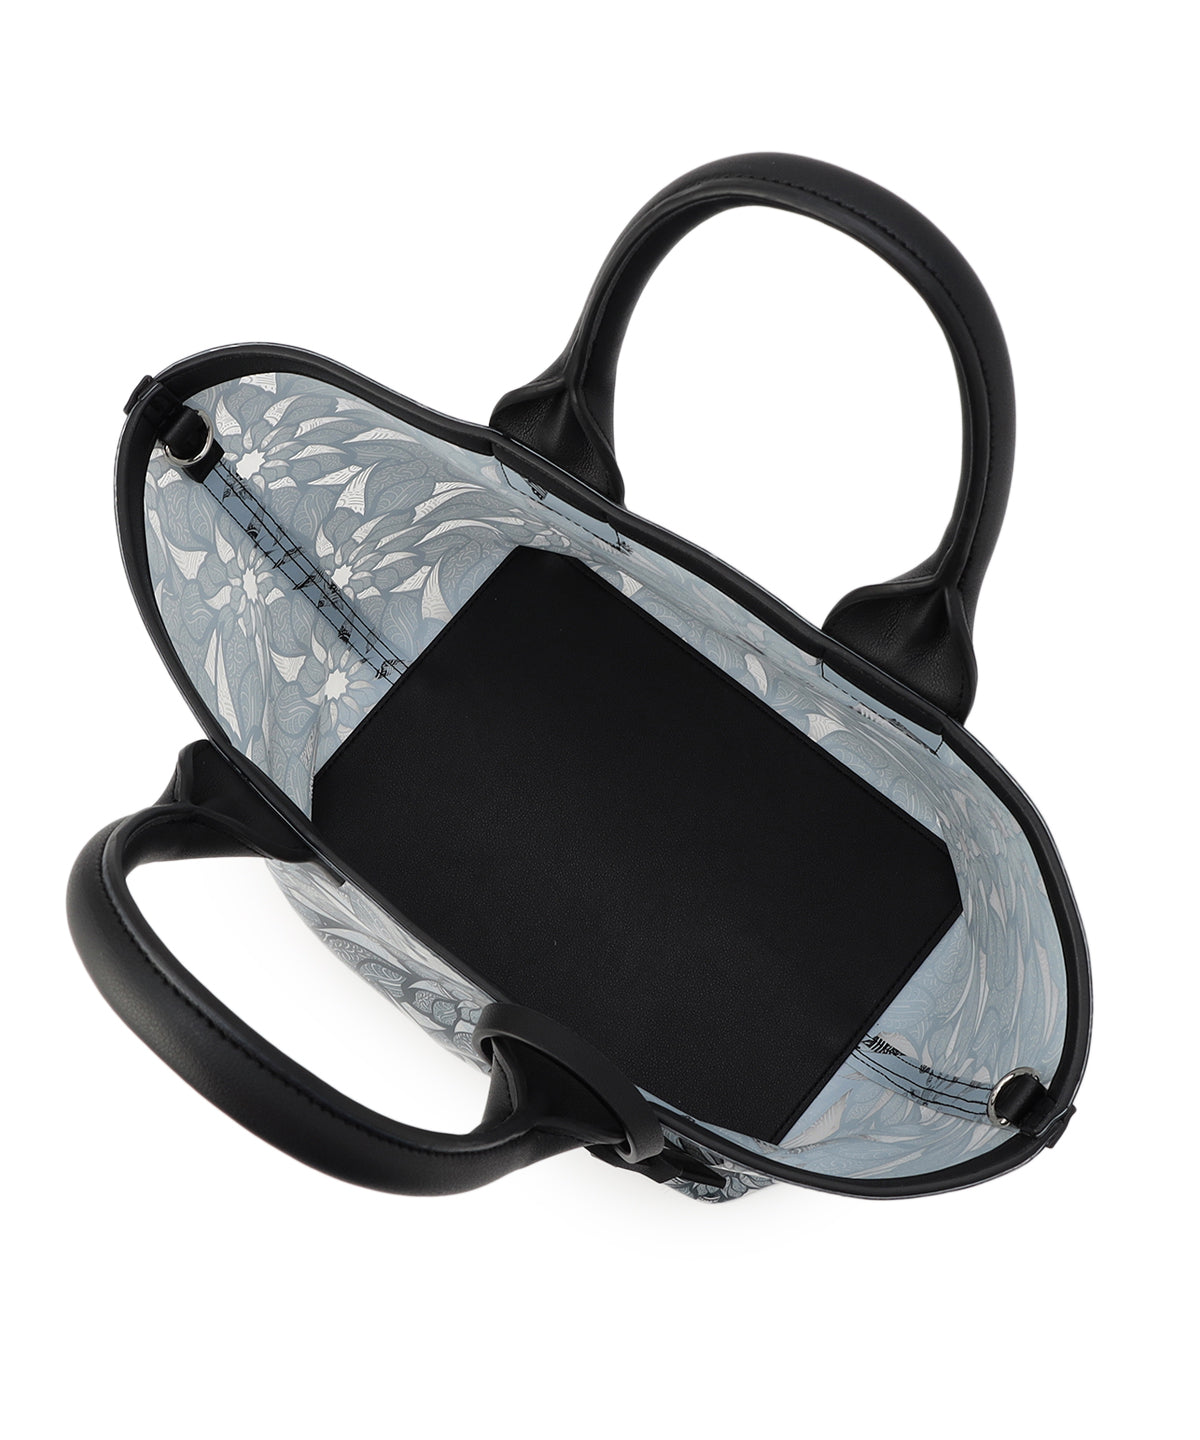 EVA×Fake Leather handle Bag (Medium) BLACK